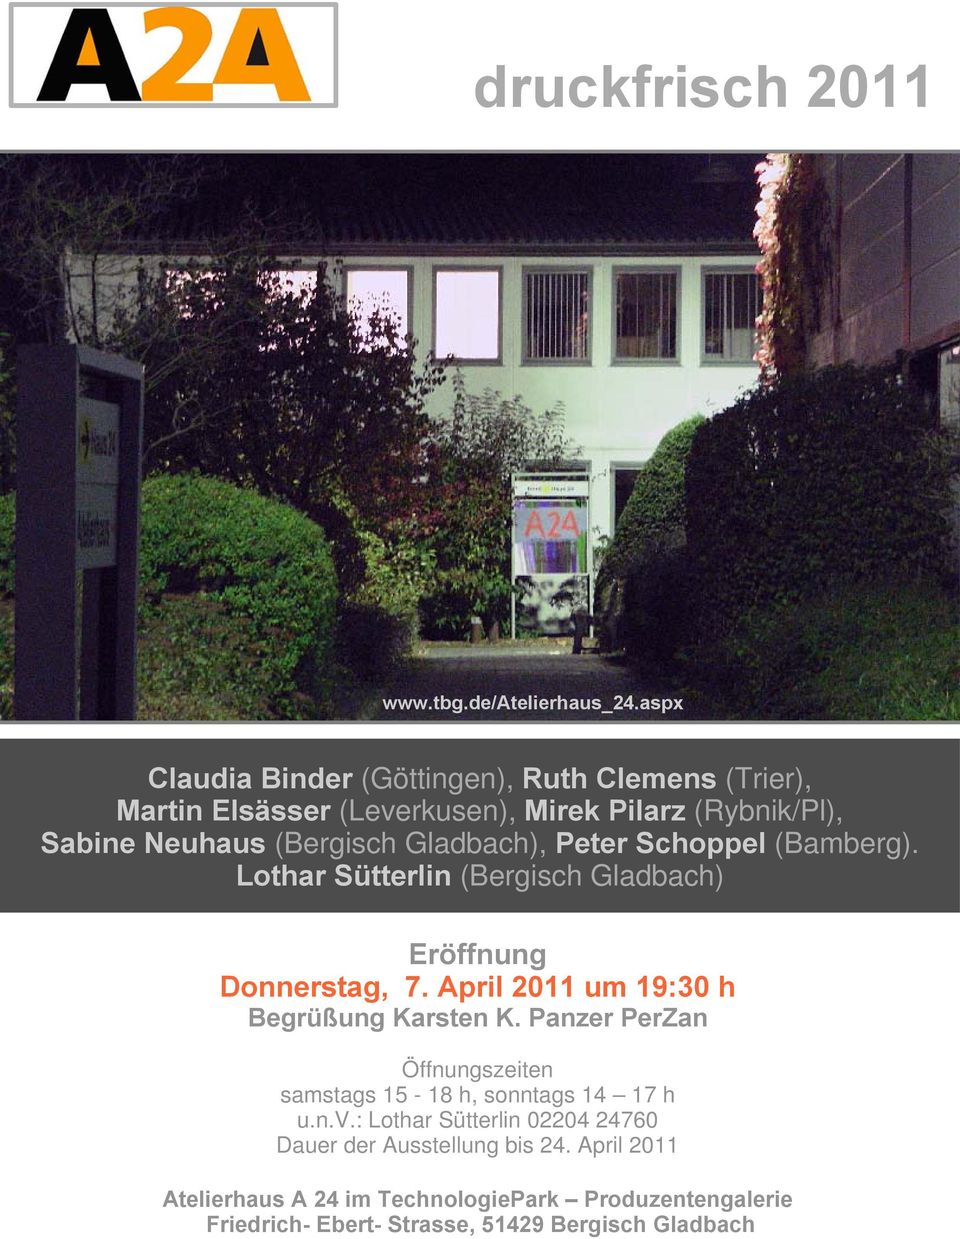 Gladbach), Peter Schoppel (Bamberg). Lothar Sütterlin (Bergisch Gladbach) Eröffnung Donnerstag, 7. April 2011 um 19:30 h Begrüßung Karsten K.